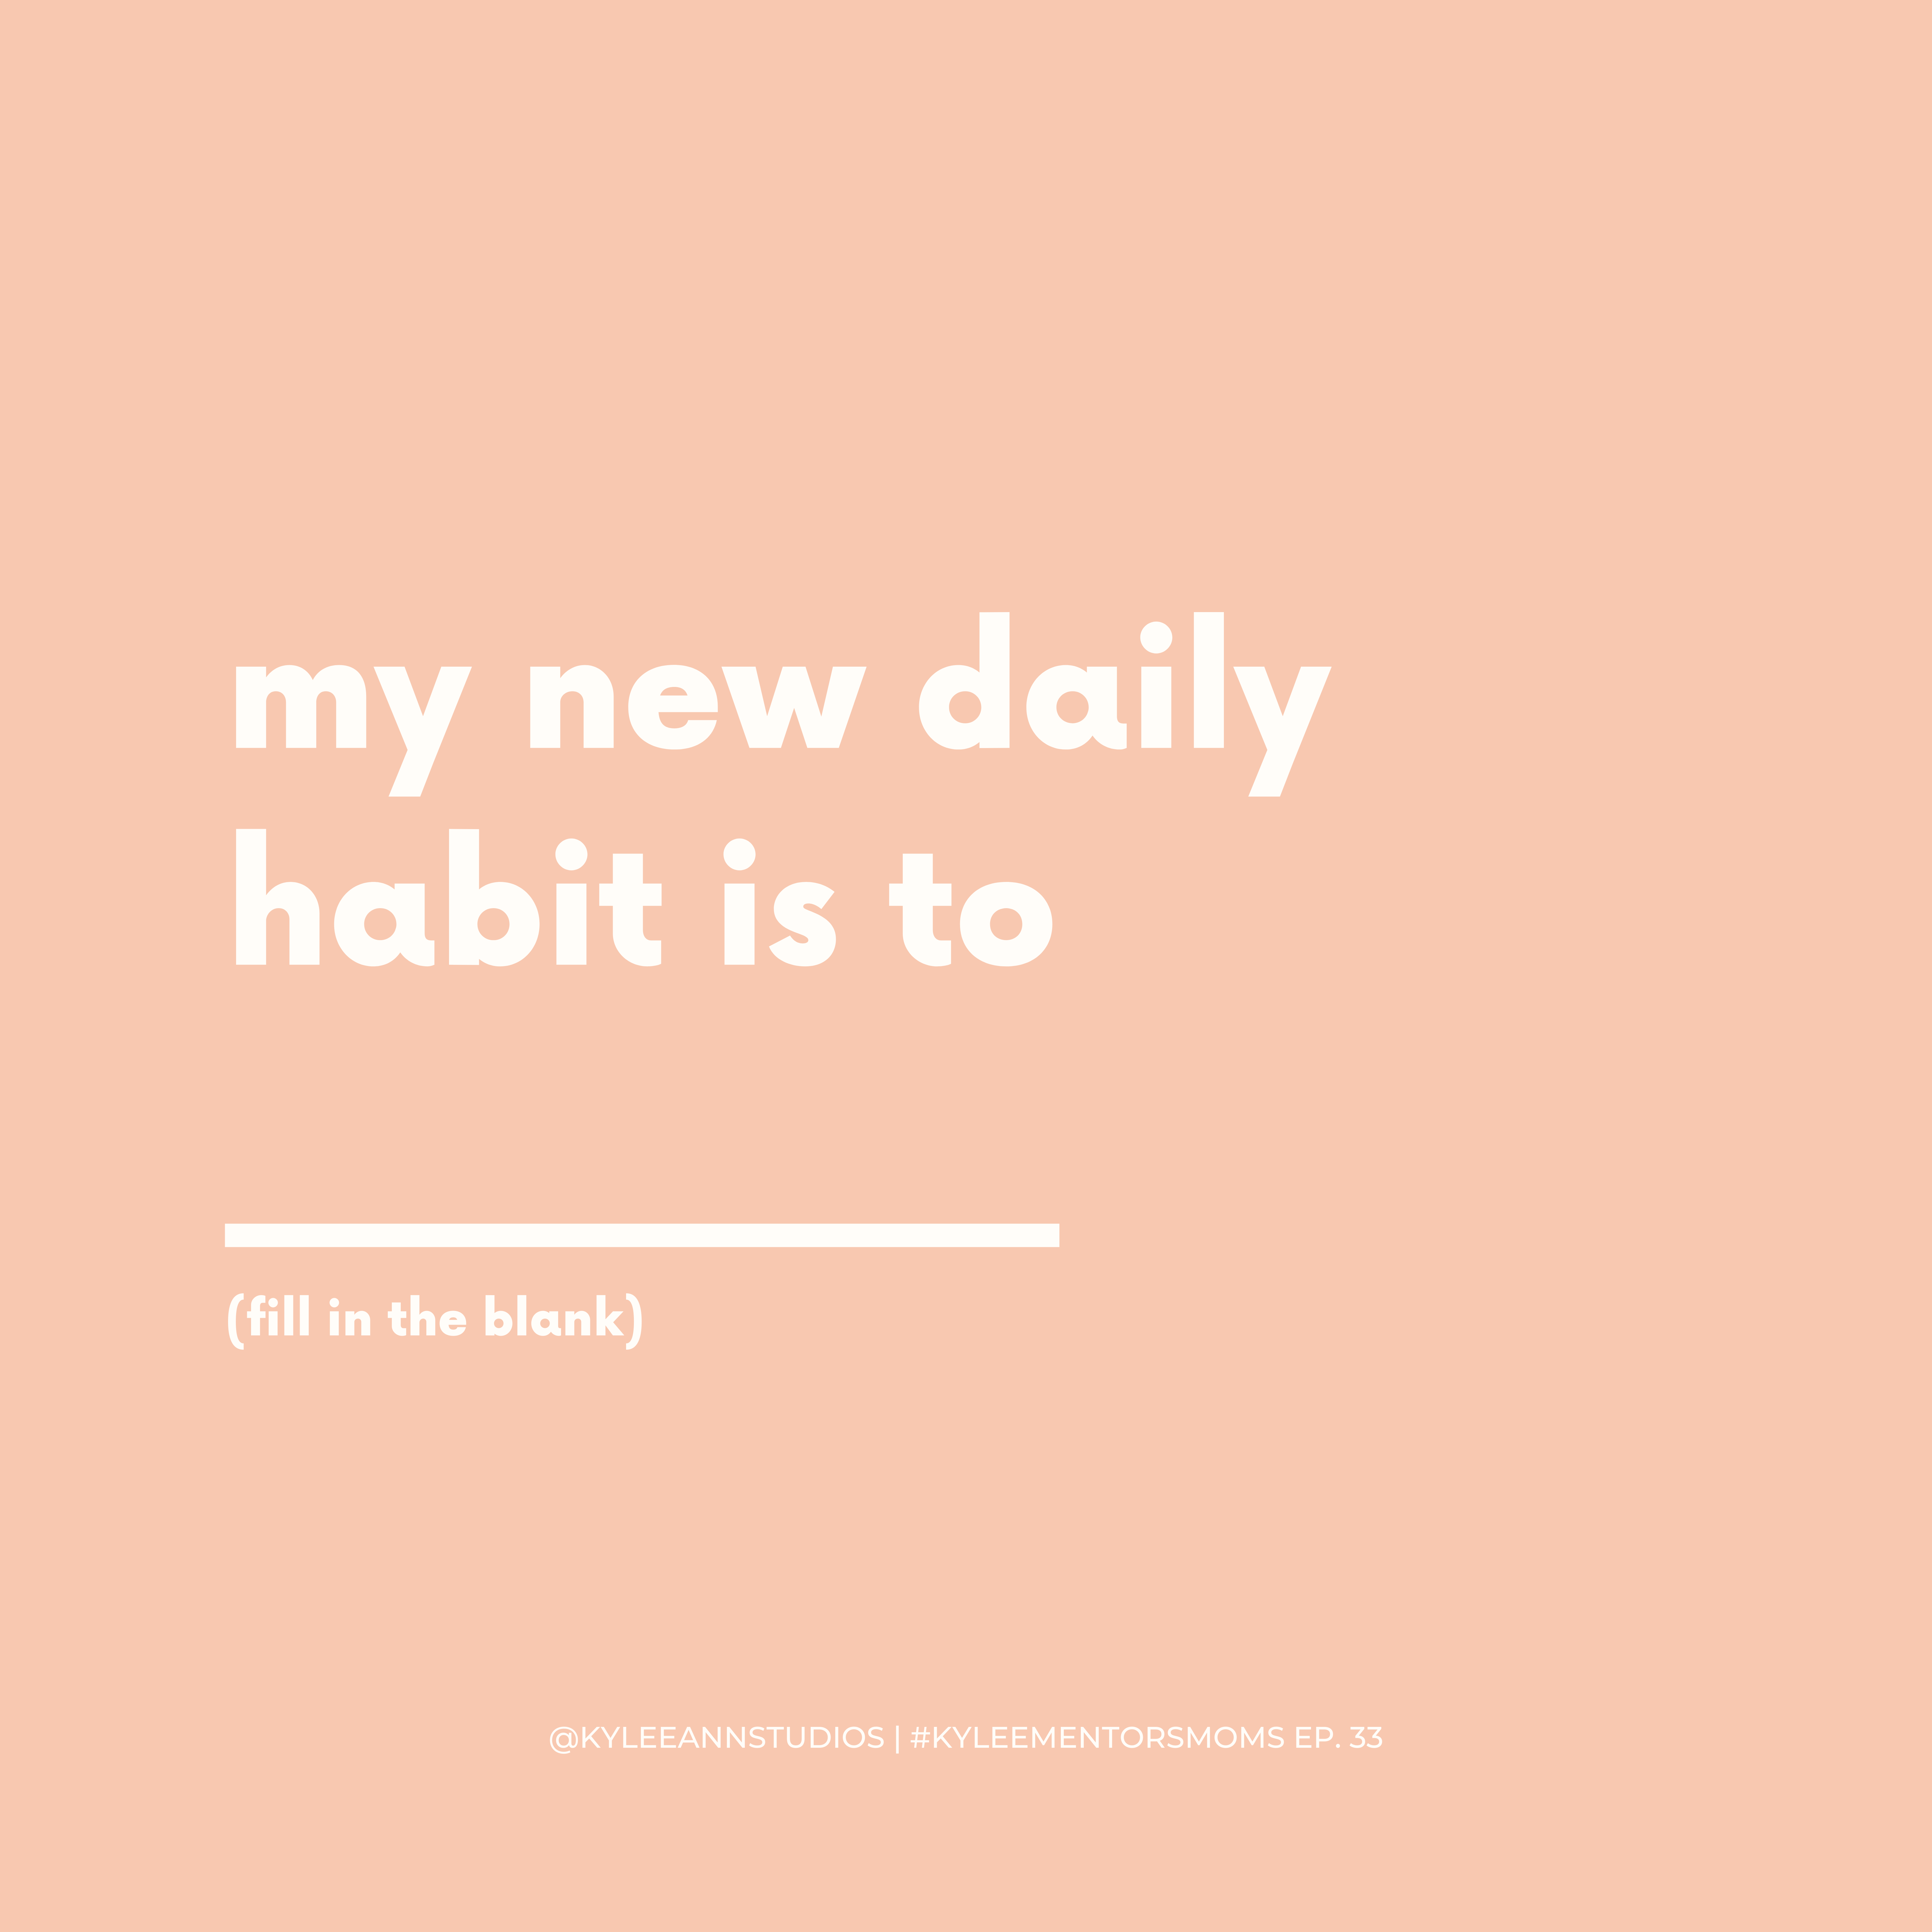 Making New Habits